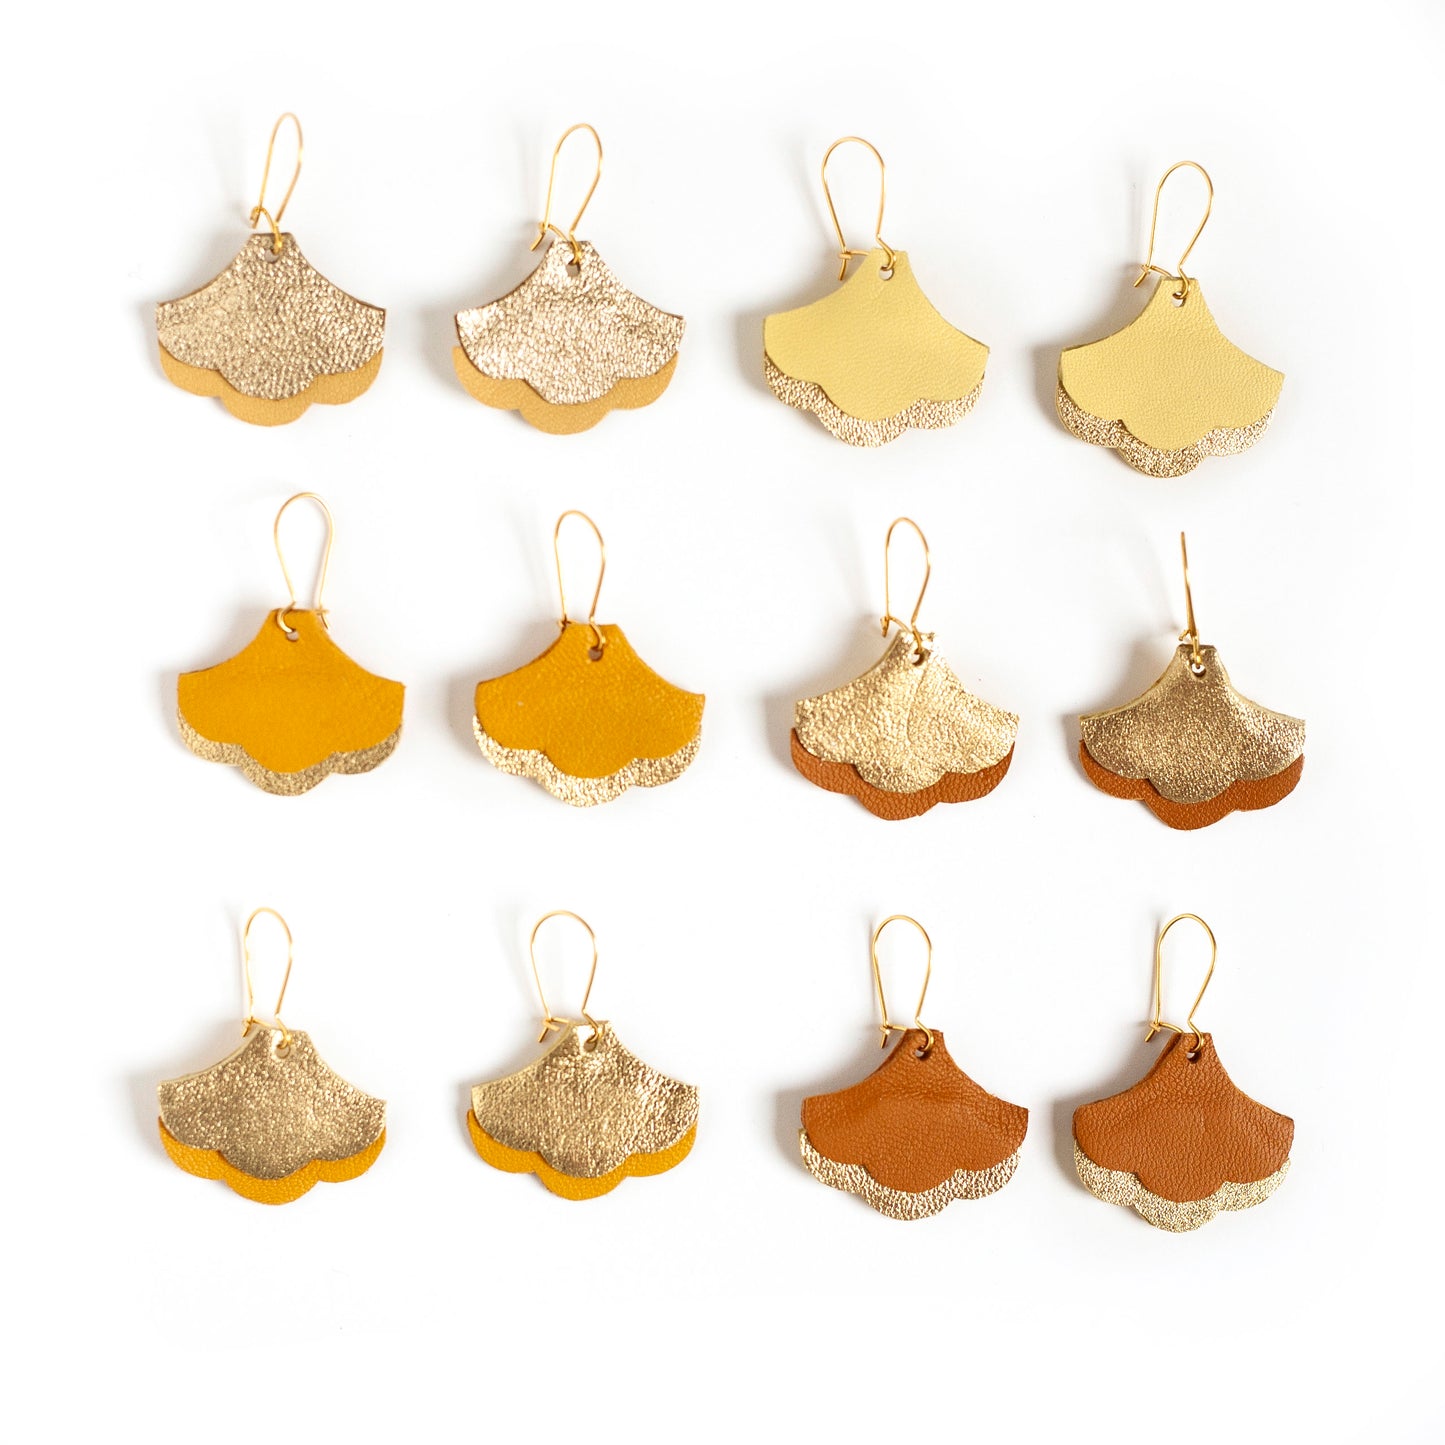 Ginkgo Biloba earrings in mustard yellow gold leather